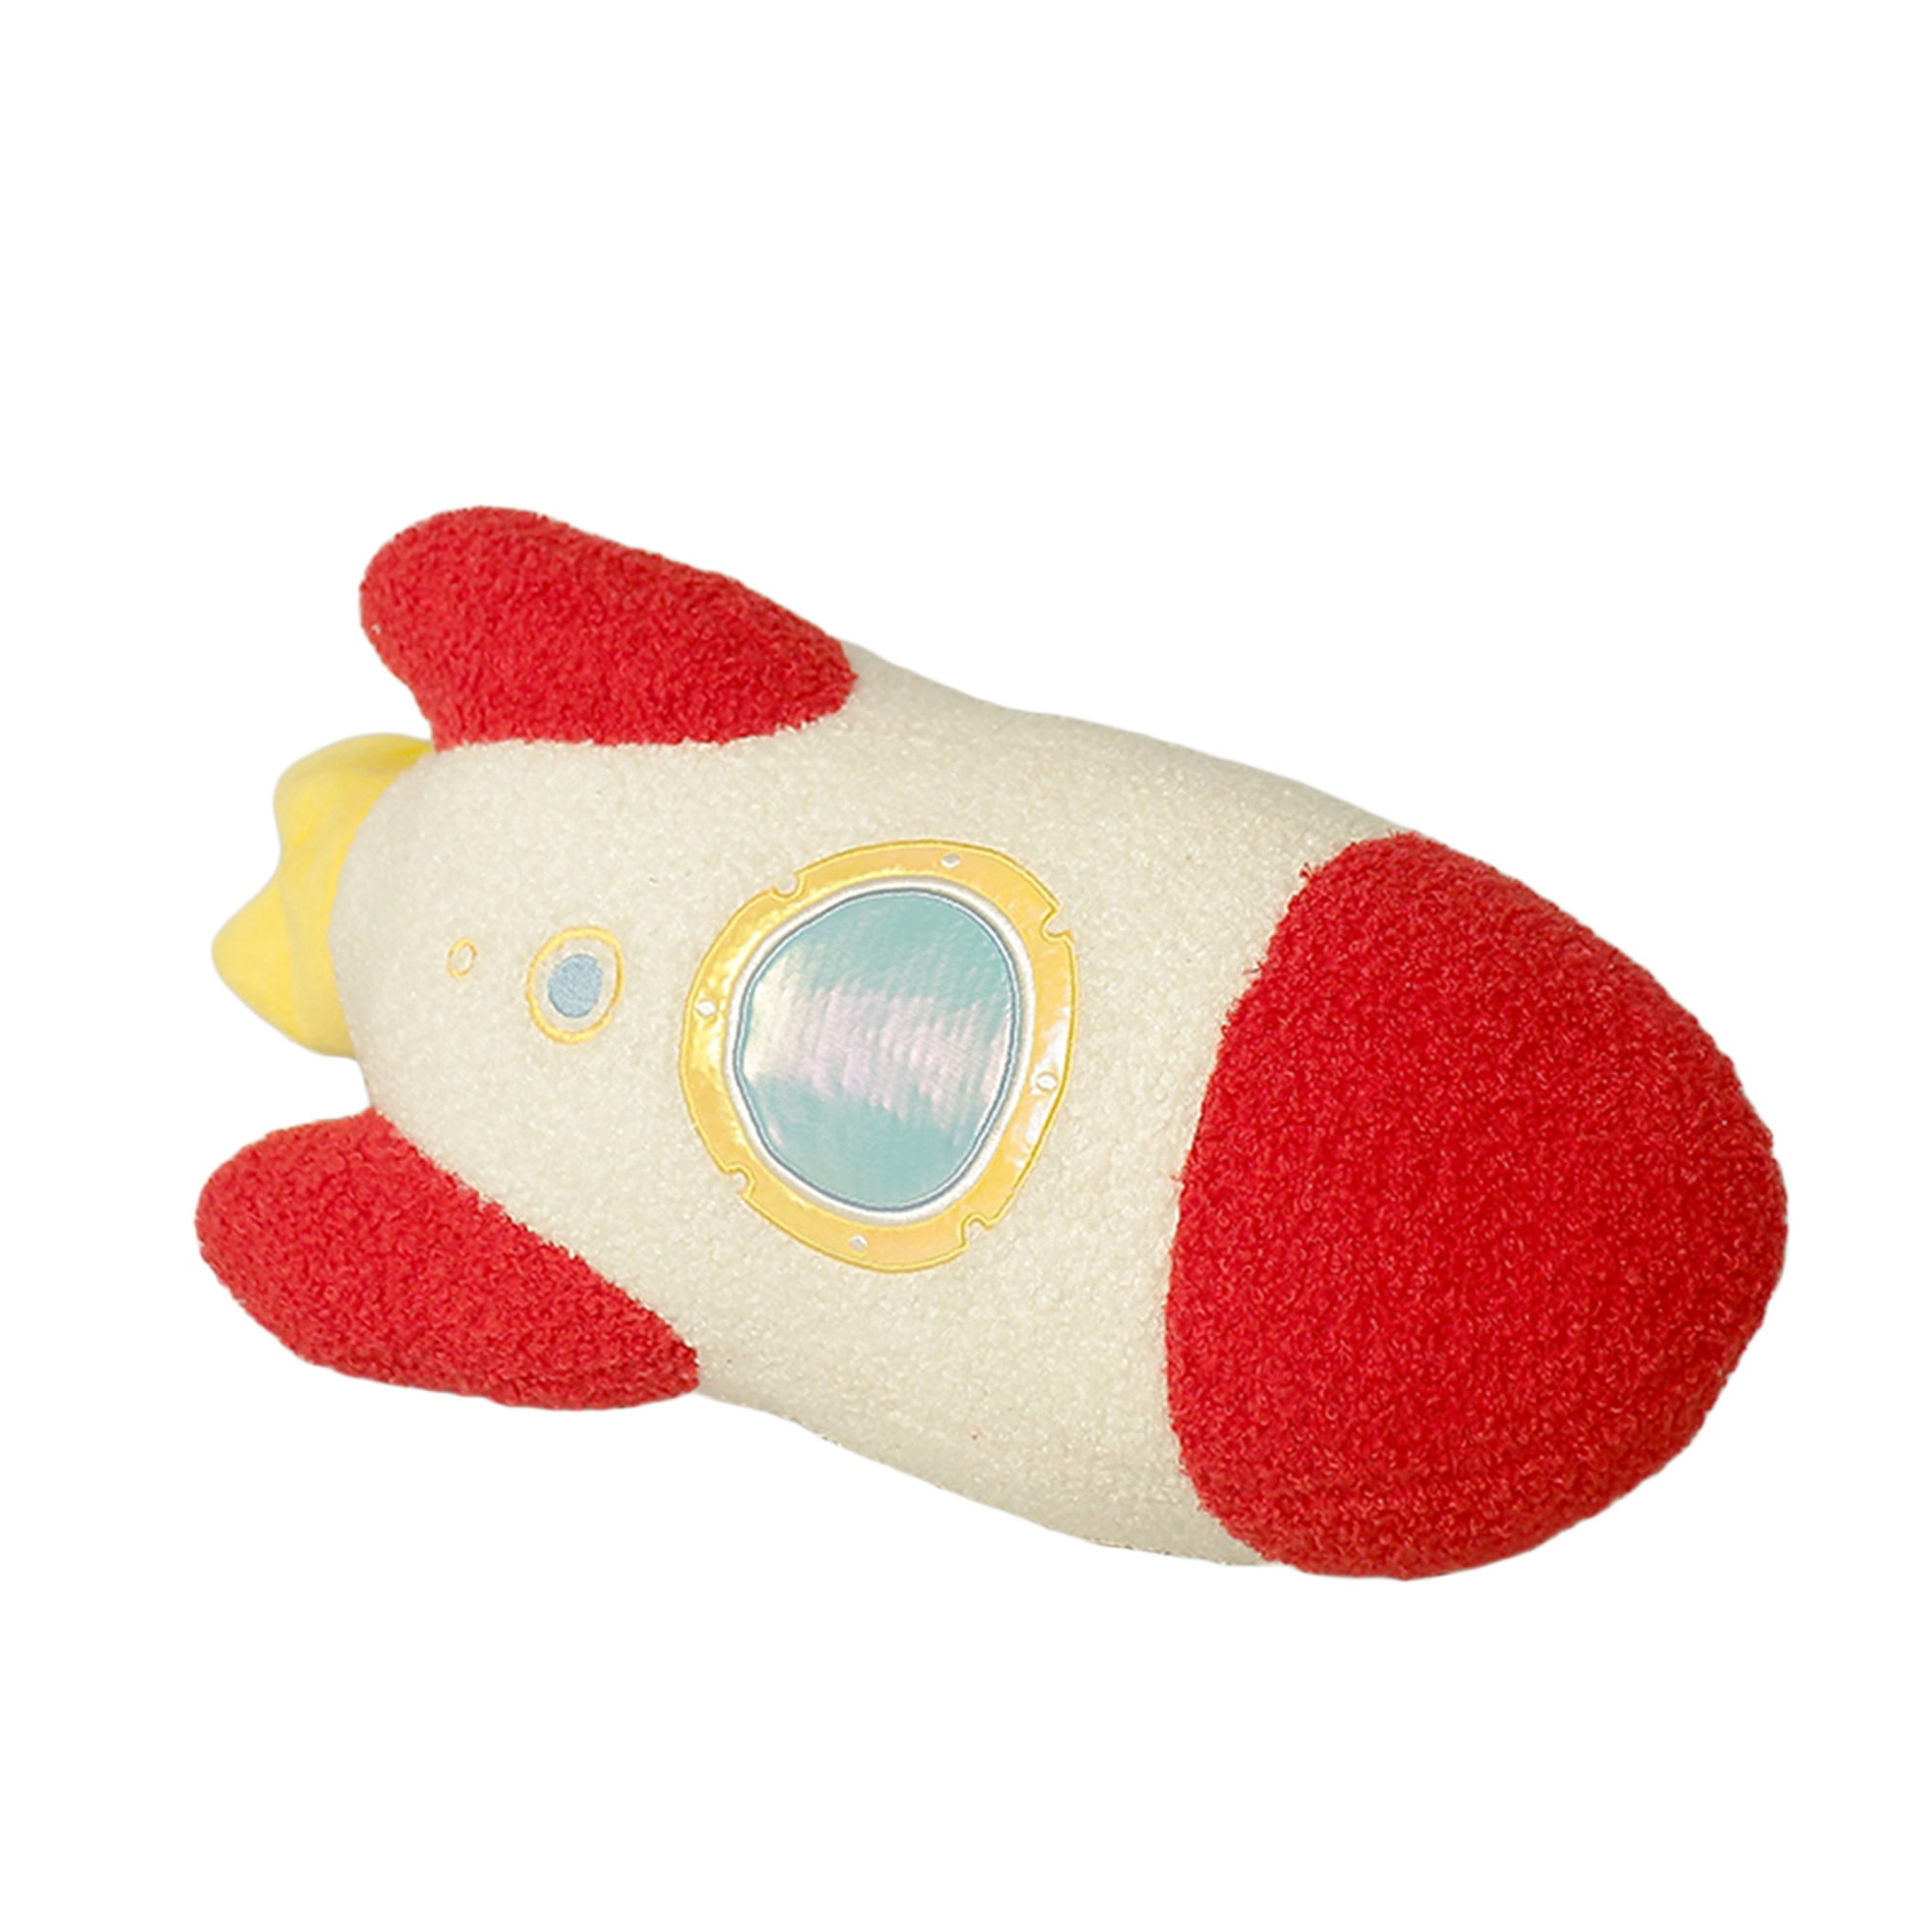 Rocket Stuffed Animal,TNOIE Soft Plush Toys Pillow Gifts for Boys Girls Baby Kids Birthday Thanksgiving Christmas Rocket